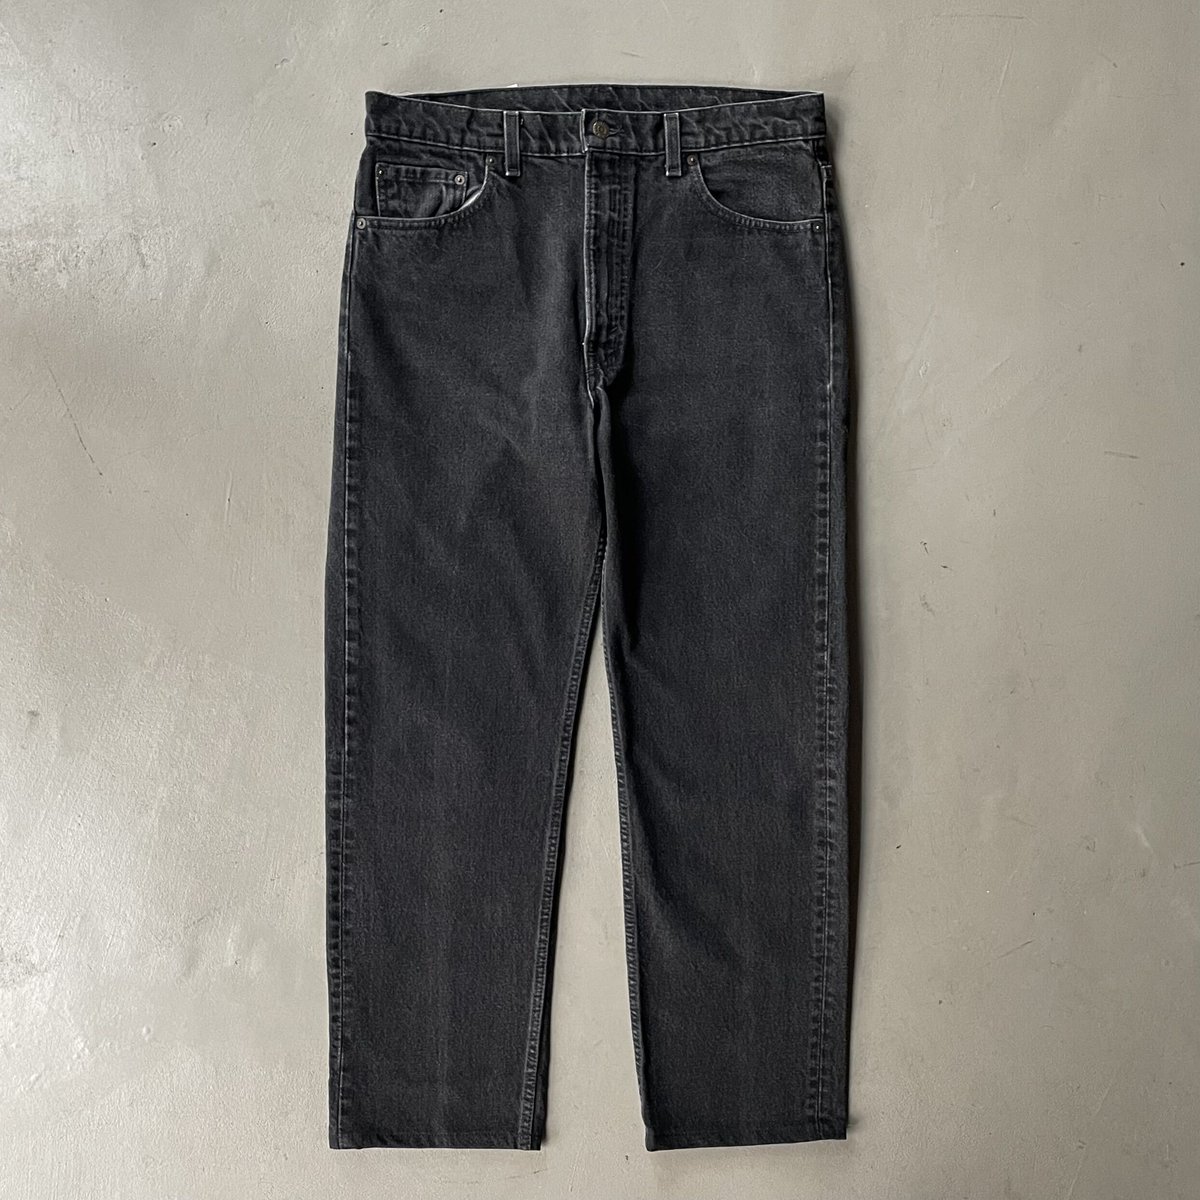 90s Levi's 501 black denim pants “made in USA”